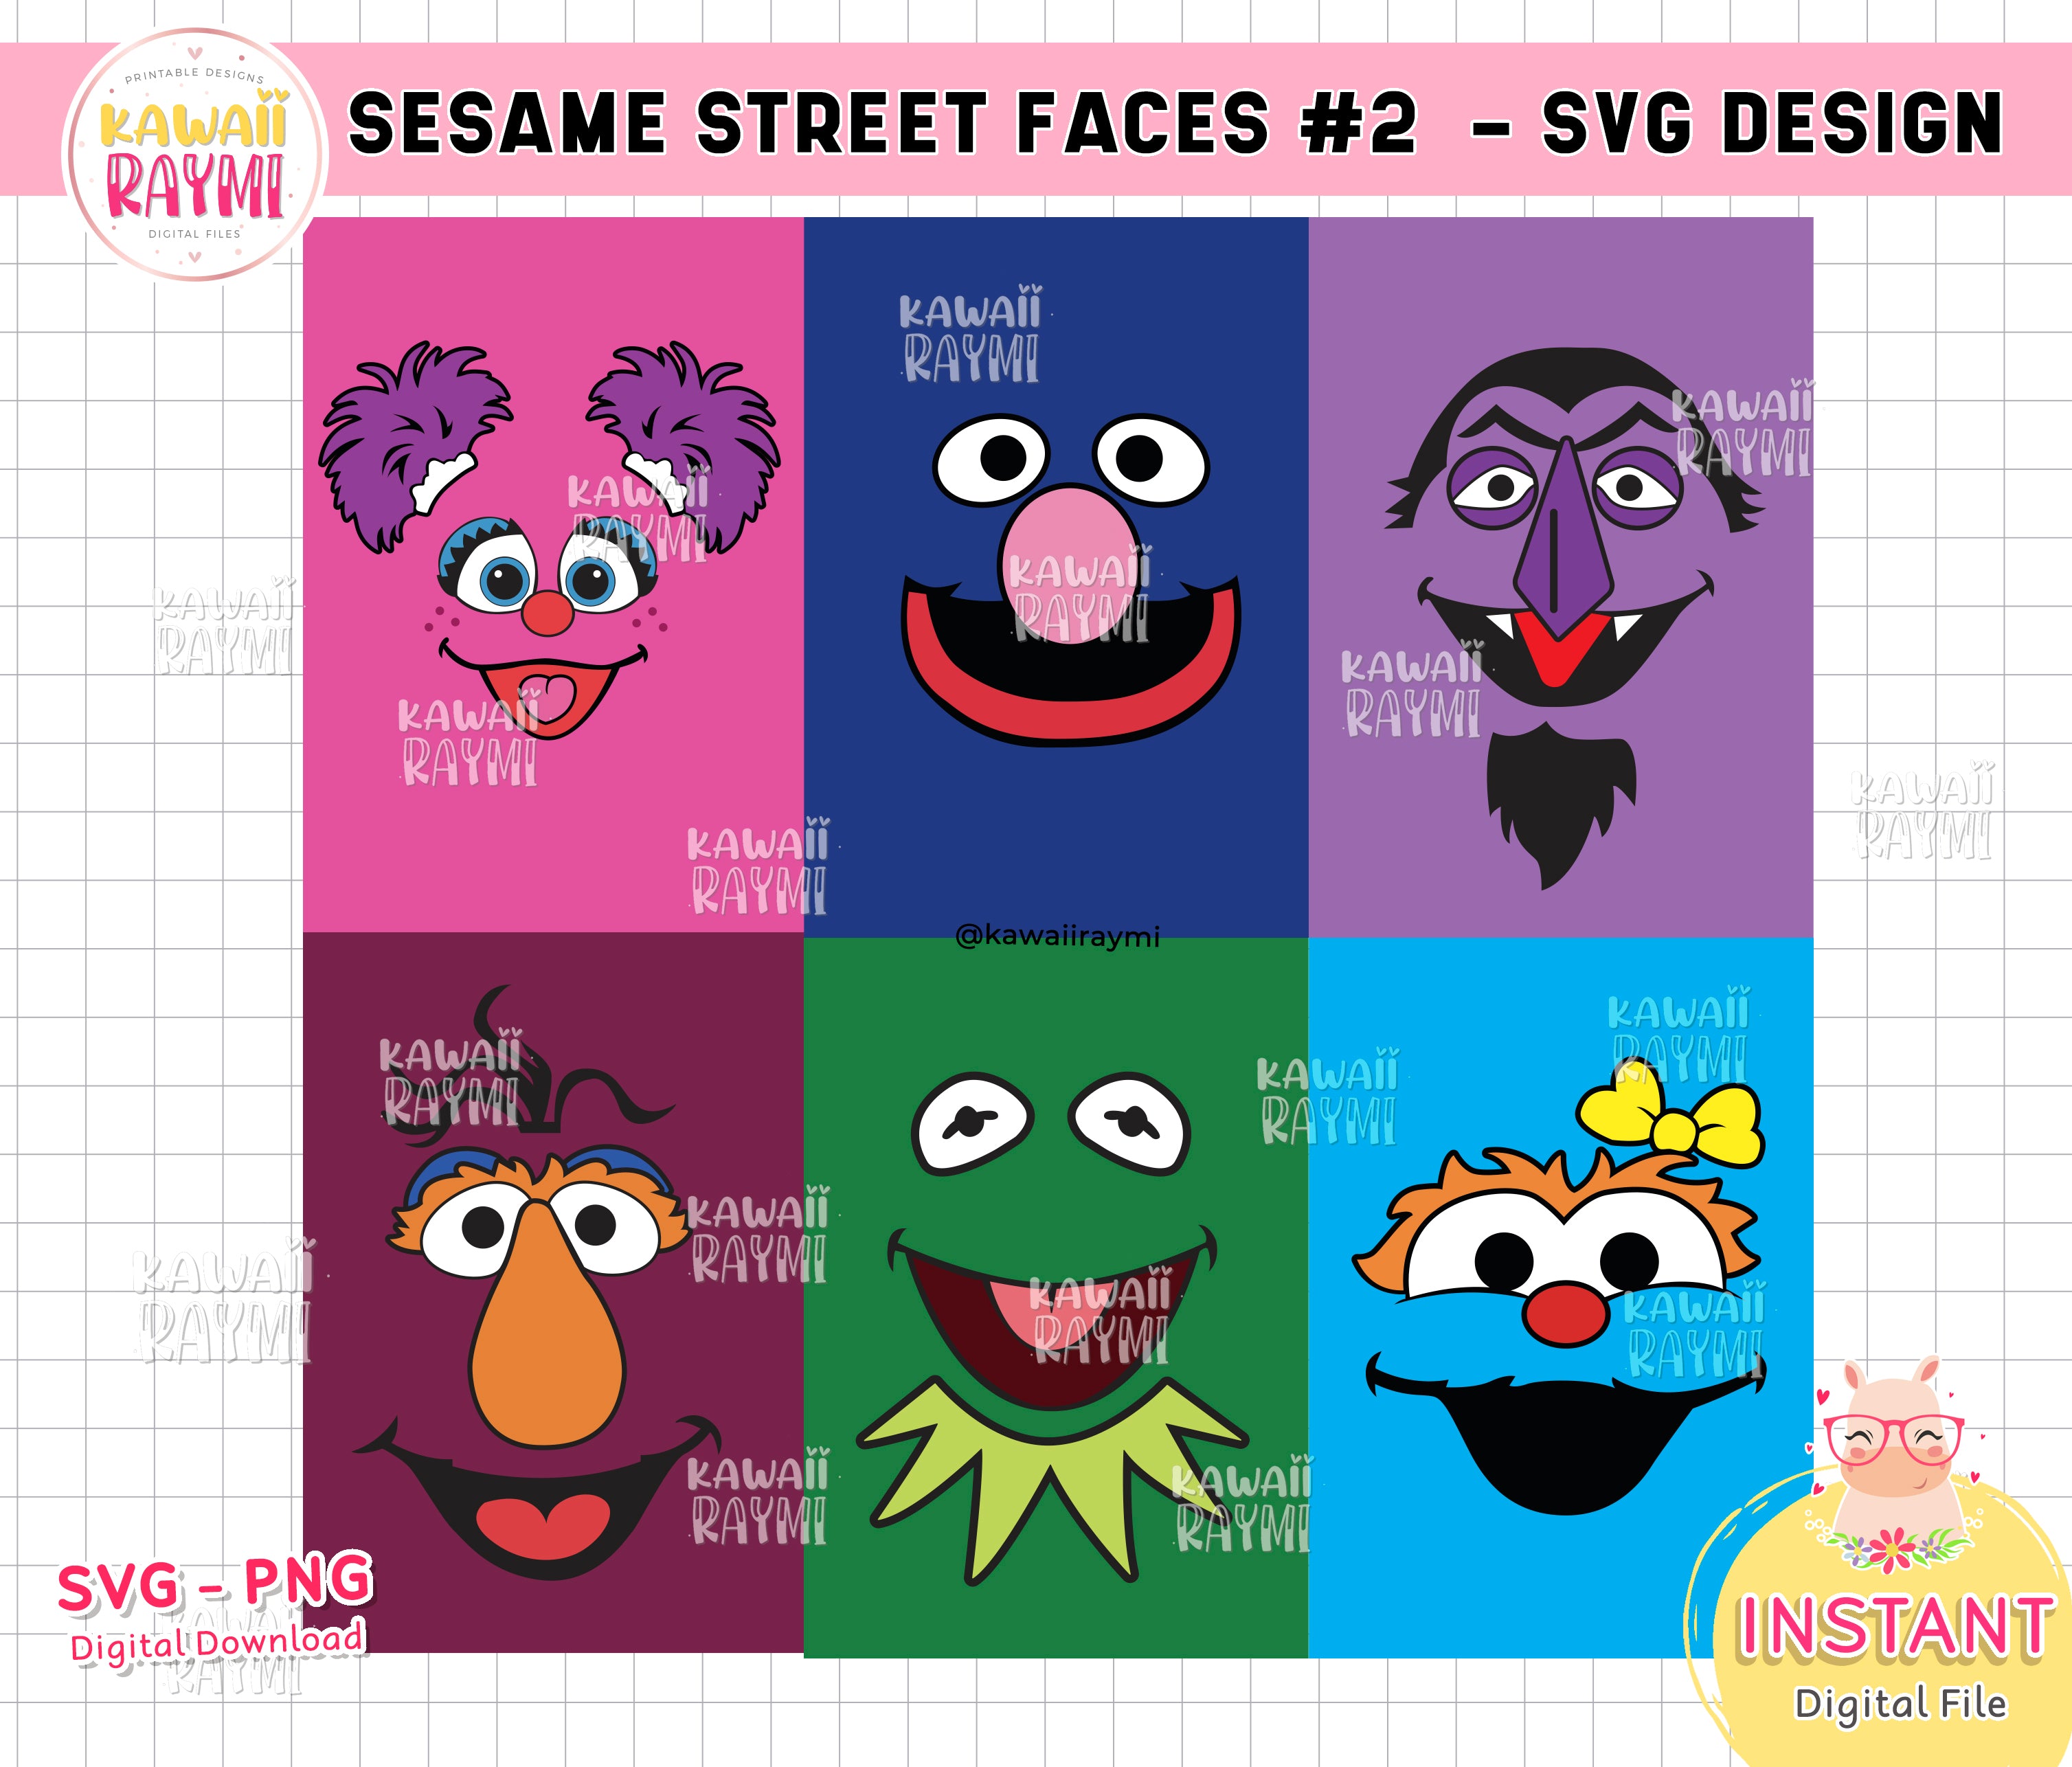 sesame street characters